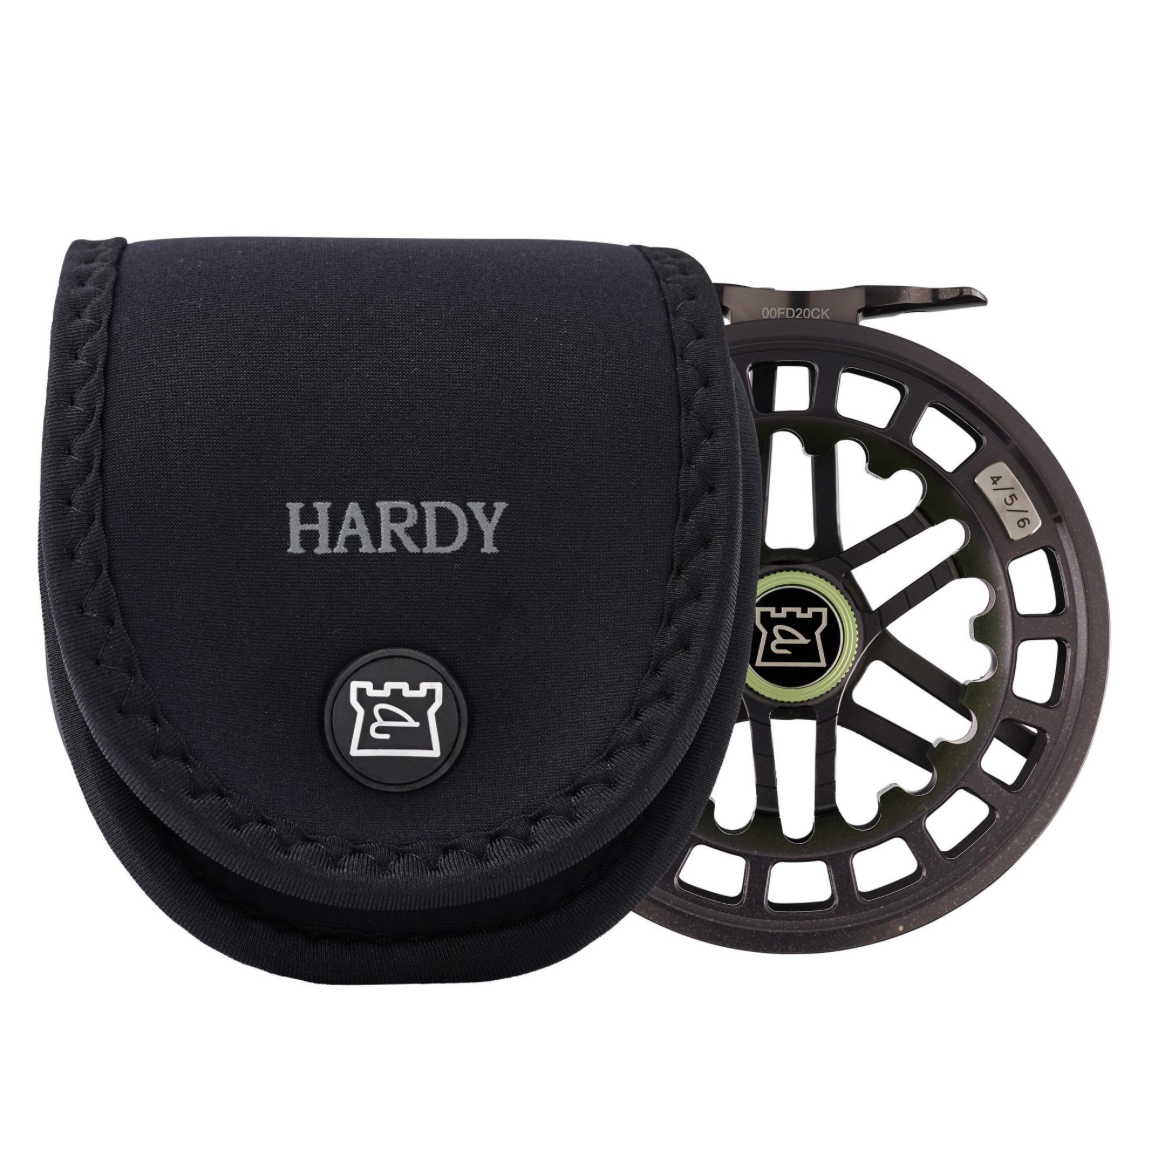 Hardy and Grey's Inc Hardy Ultradisc Fly Reel